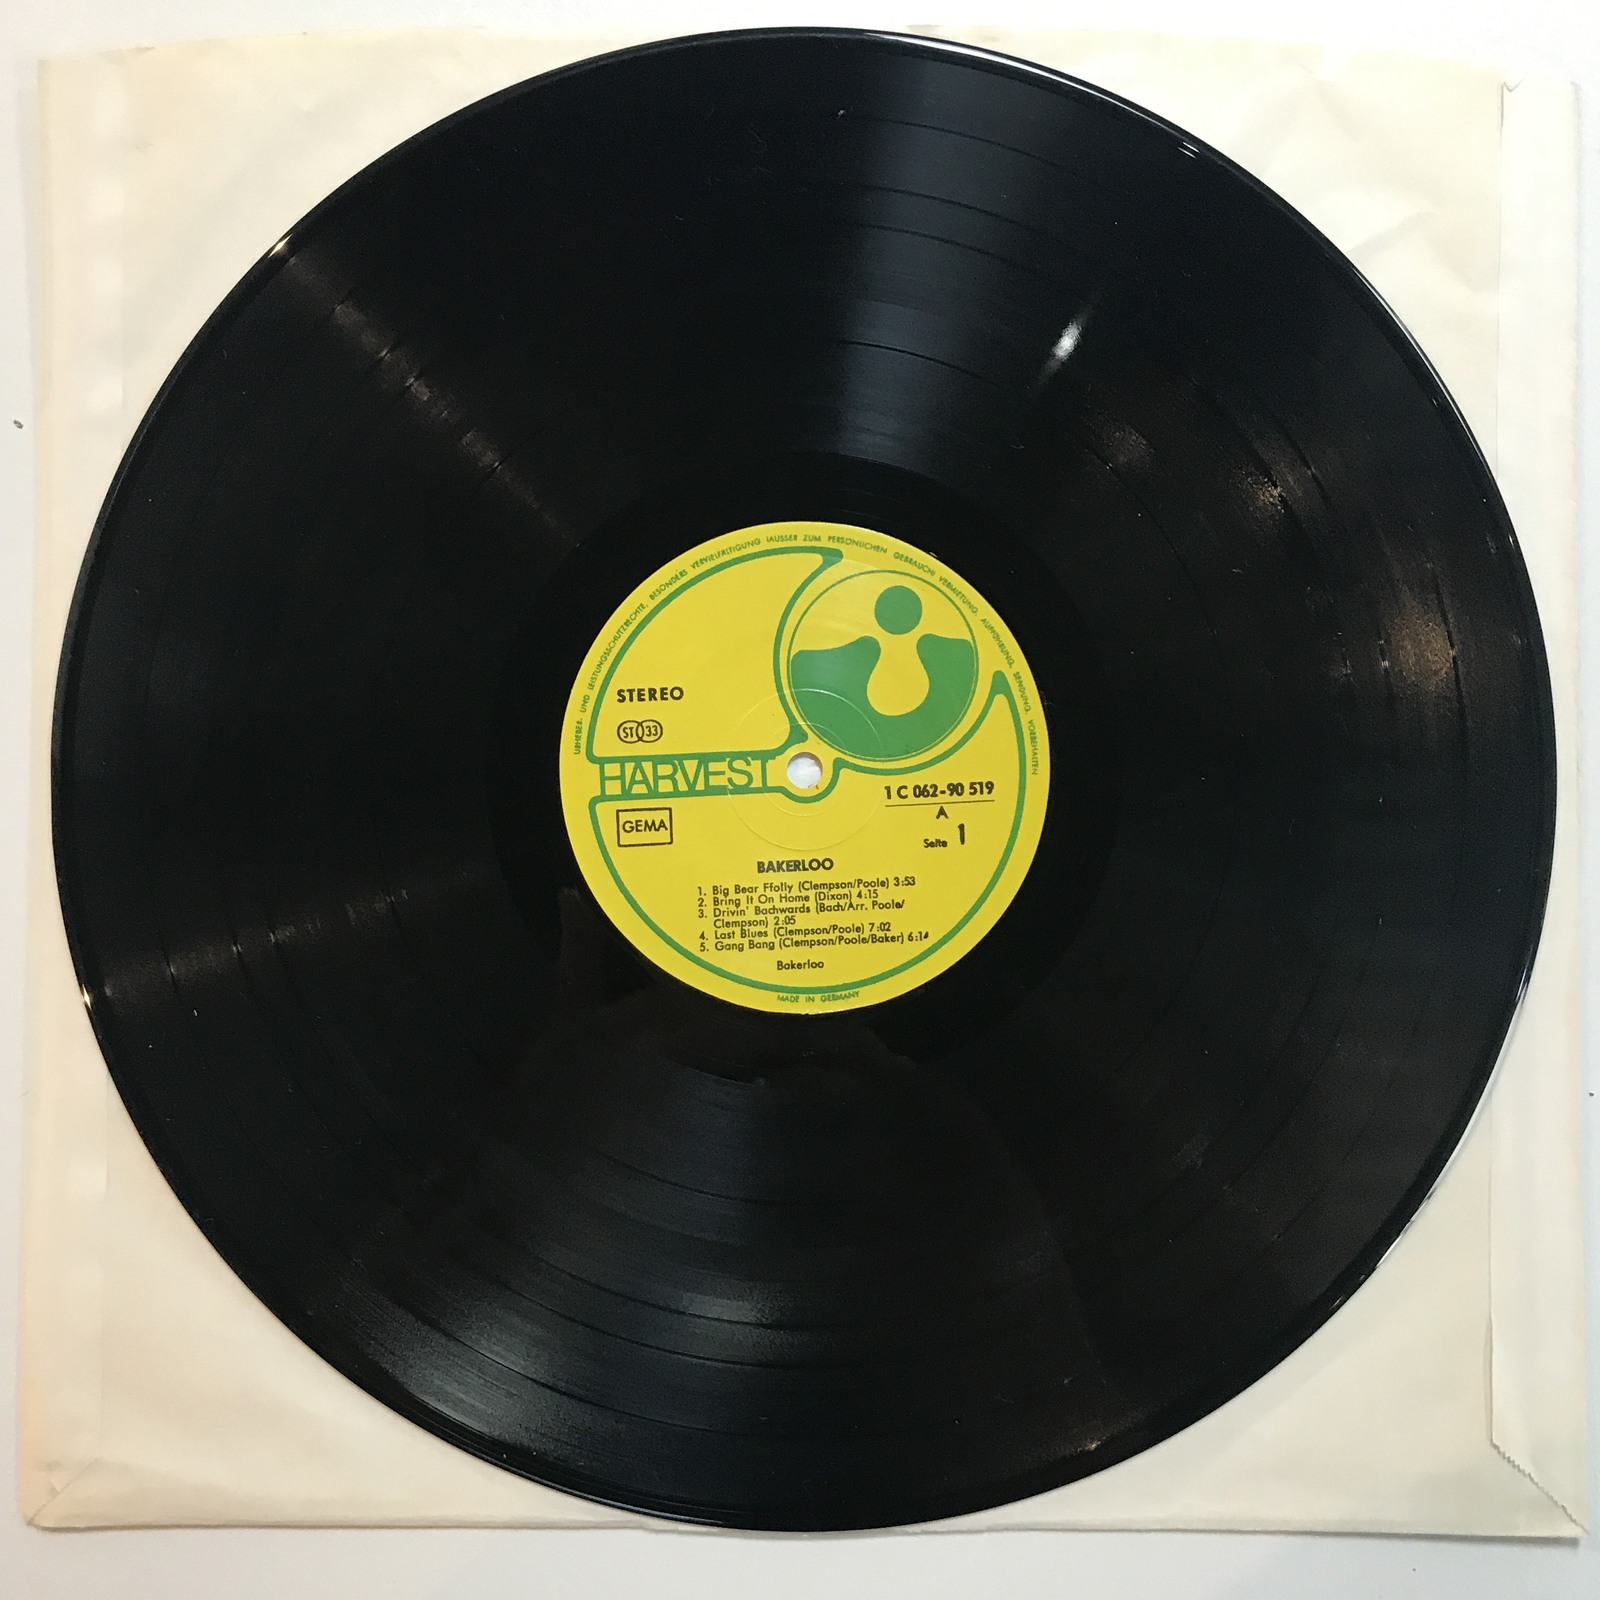 Bakerloo Bakerloo 1969 German Harvest vinyl LP For Sale Online and ...